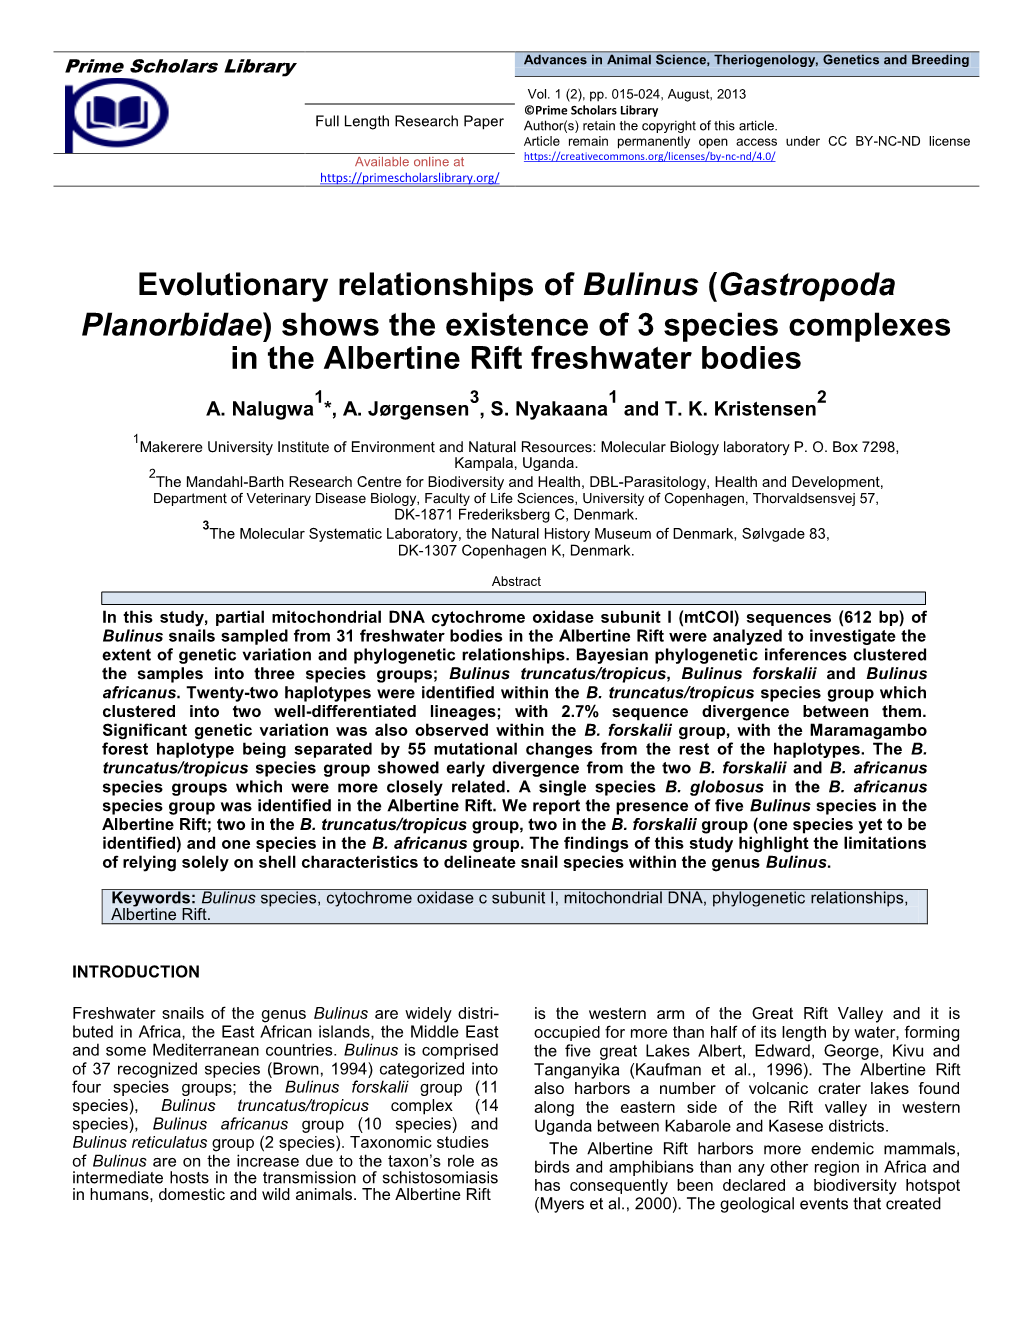 Evolutionary Relationships of Bulinus (Gastropoda Planorbidae) Shows